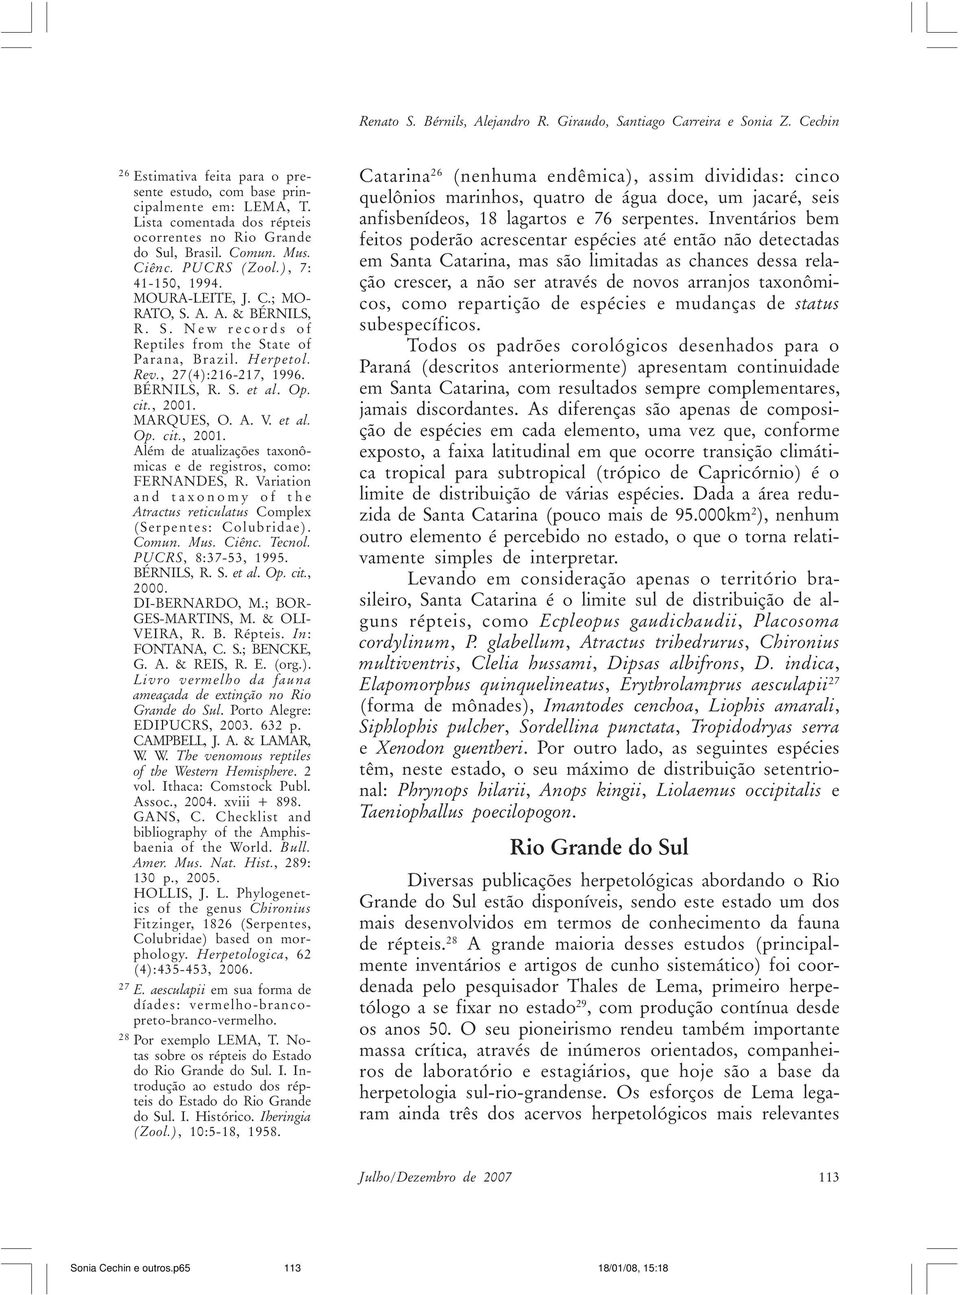 Herpetol. Rev., 27(4):216-217, 1996. BÉRNILS, R. S. et al. Op. cit., 2001. MARQUES, O. A. V. et al. Op. cit., 2001. Além de atualizações taxonômicas e de registros, como: FERNANDES, R.